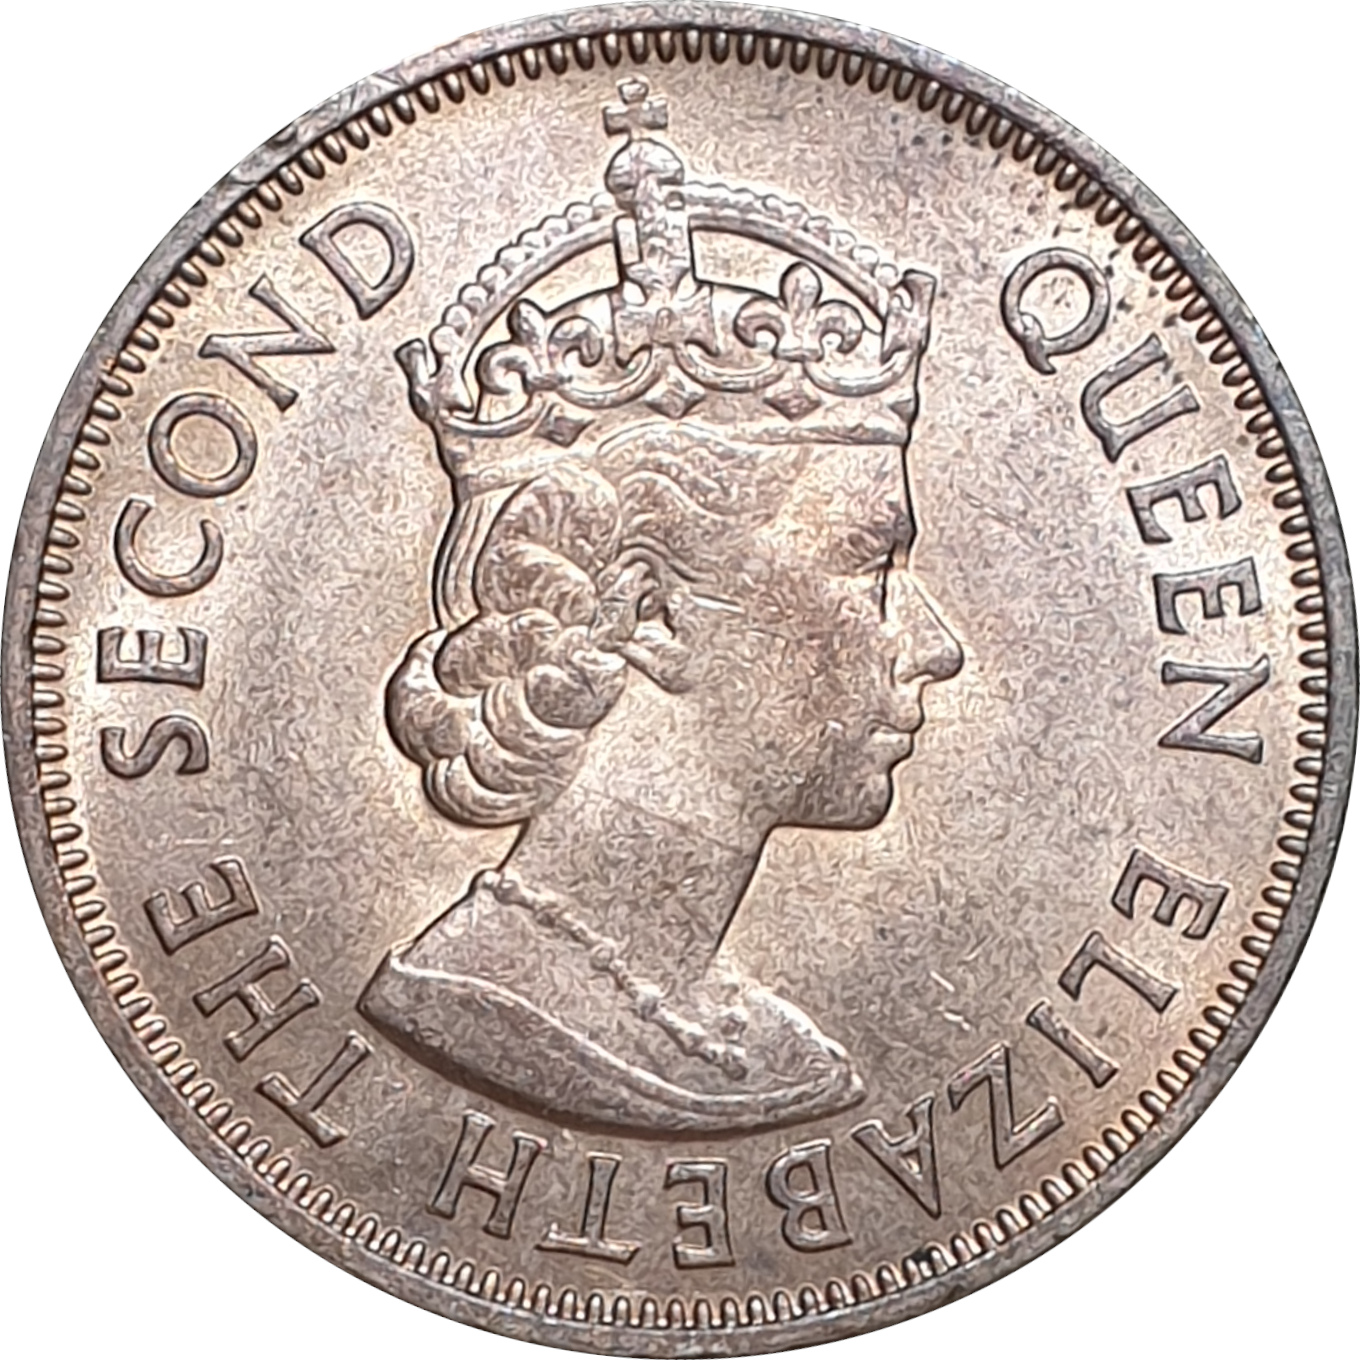 5 cents - Élizabeth II